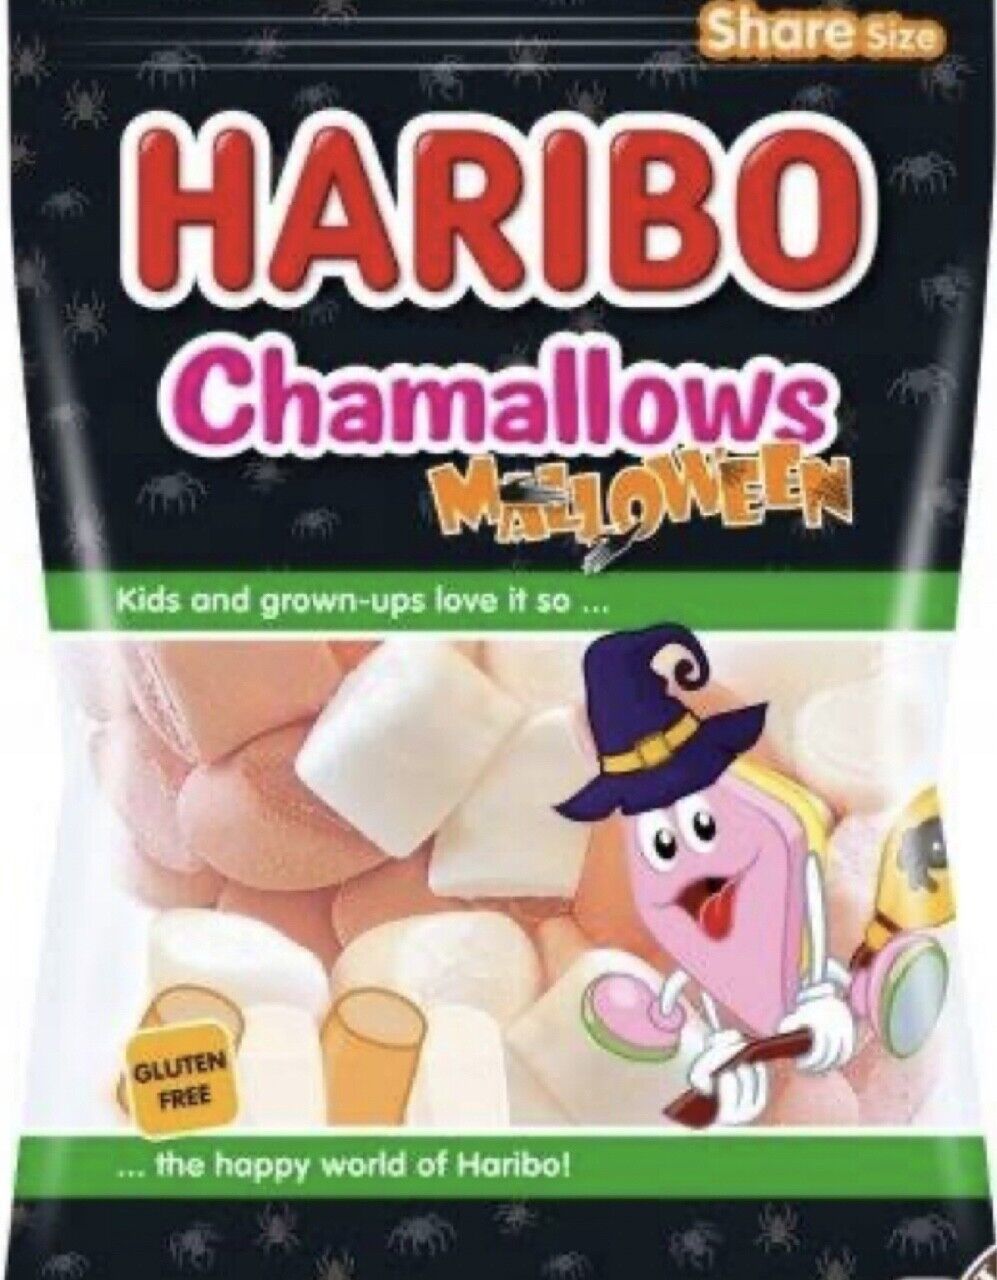 HARIBO Chamallows HALLOWEEN marshmallow gummy bears 160g-FREE SHIPPING - $8.21